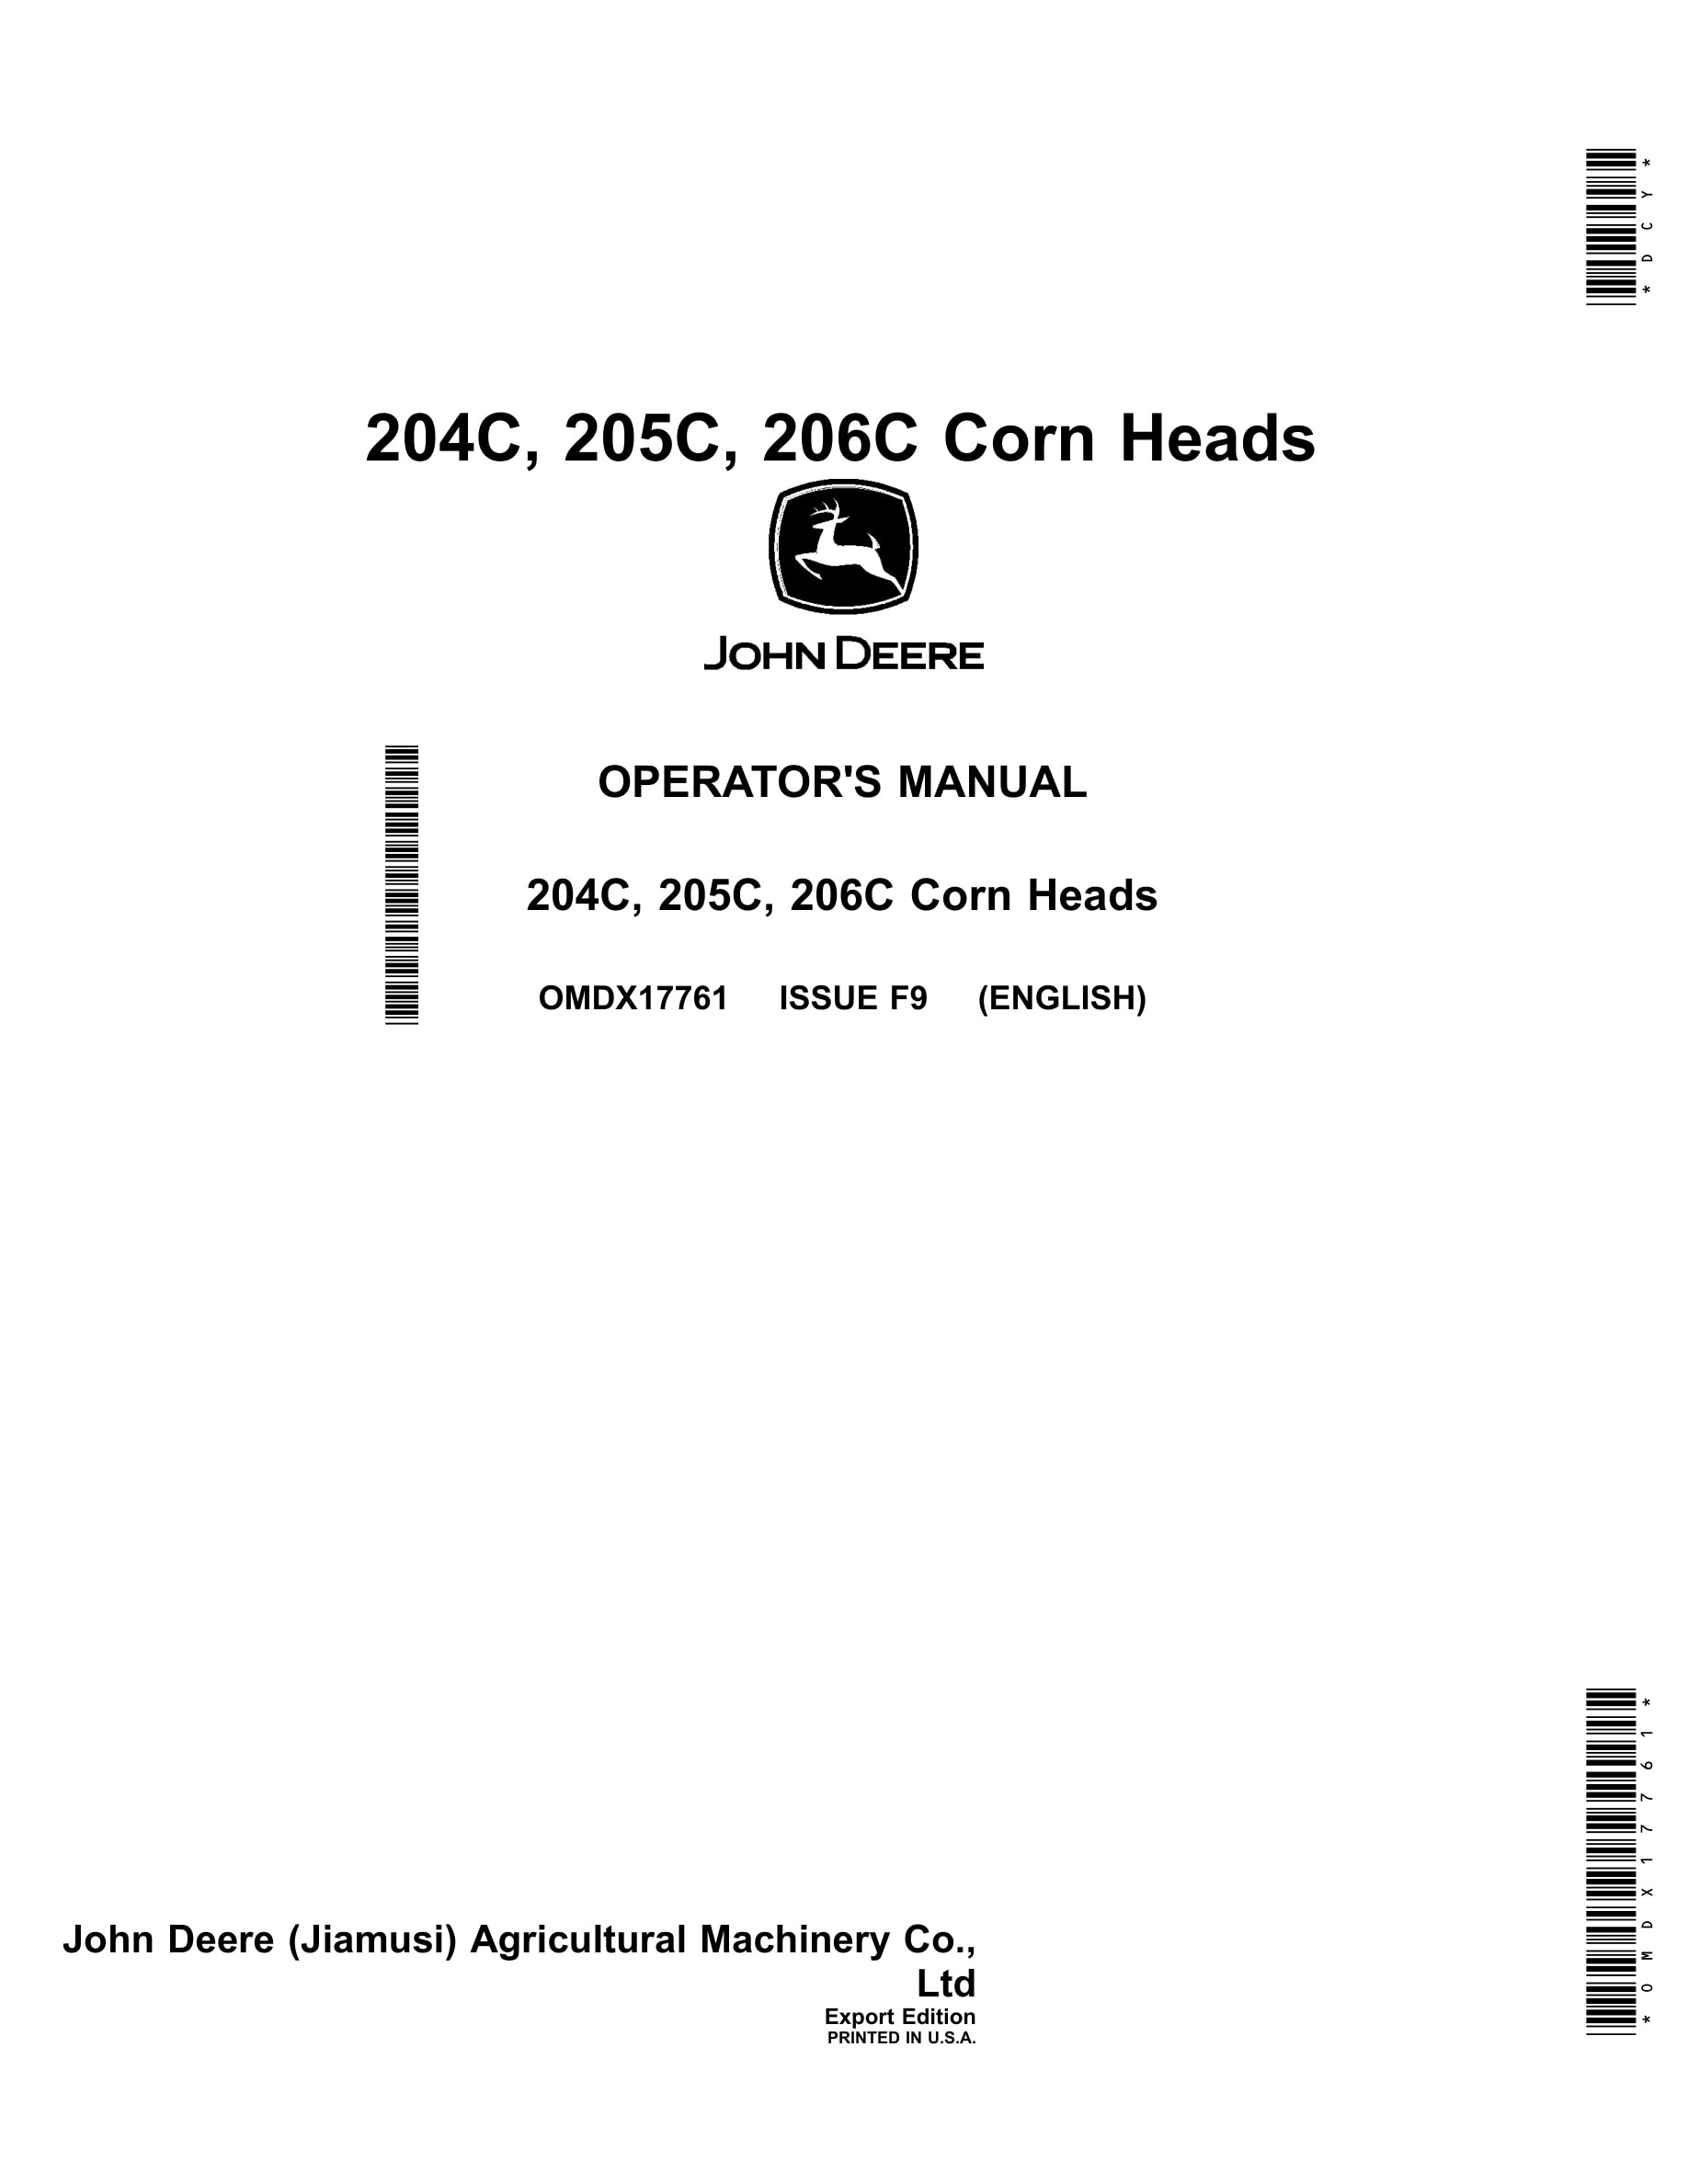 John Deere 204C, 205C, 206C Corn Heads Operator Manual OMDX17761-1